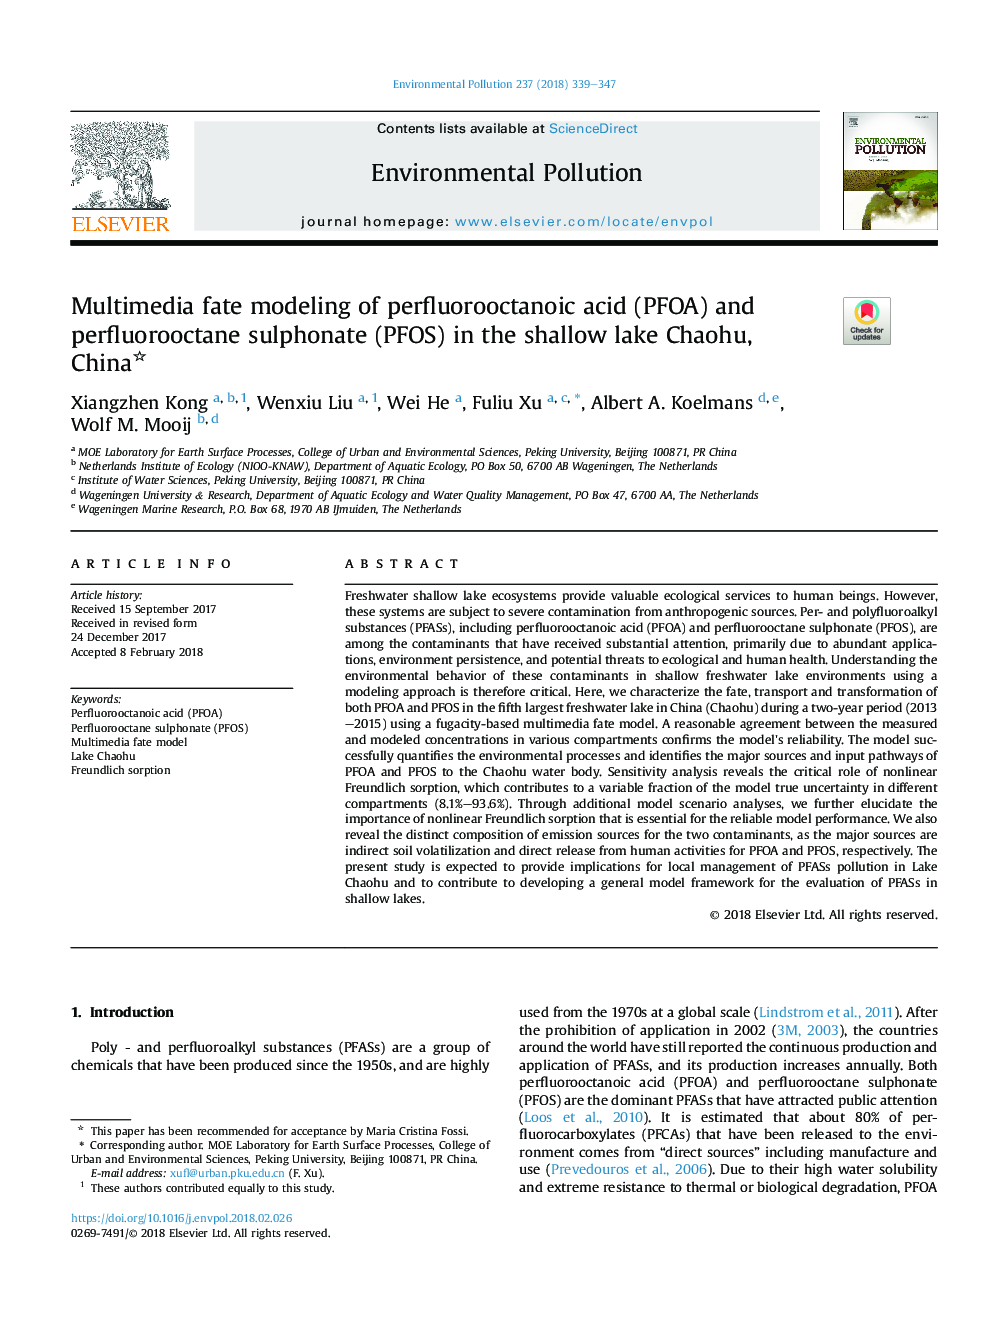 Multimedia fate modeling of perfluorooctanoic acid (PFOA) and perfluorooctane sulphonate (PFOS) in the shallow lake Chaohu, China